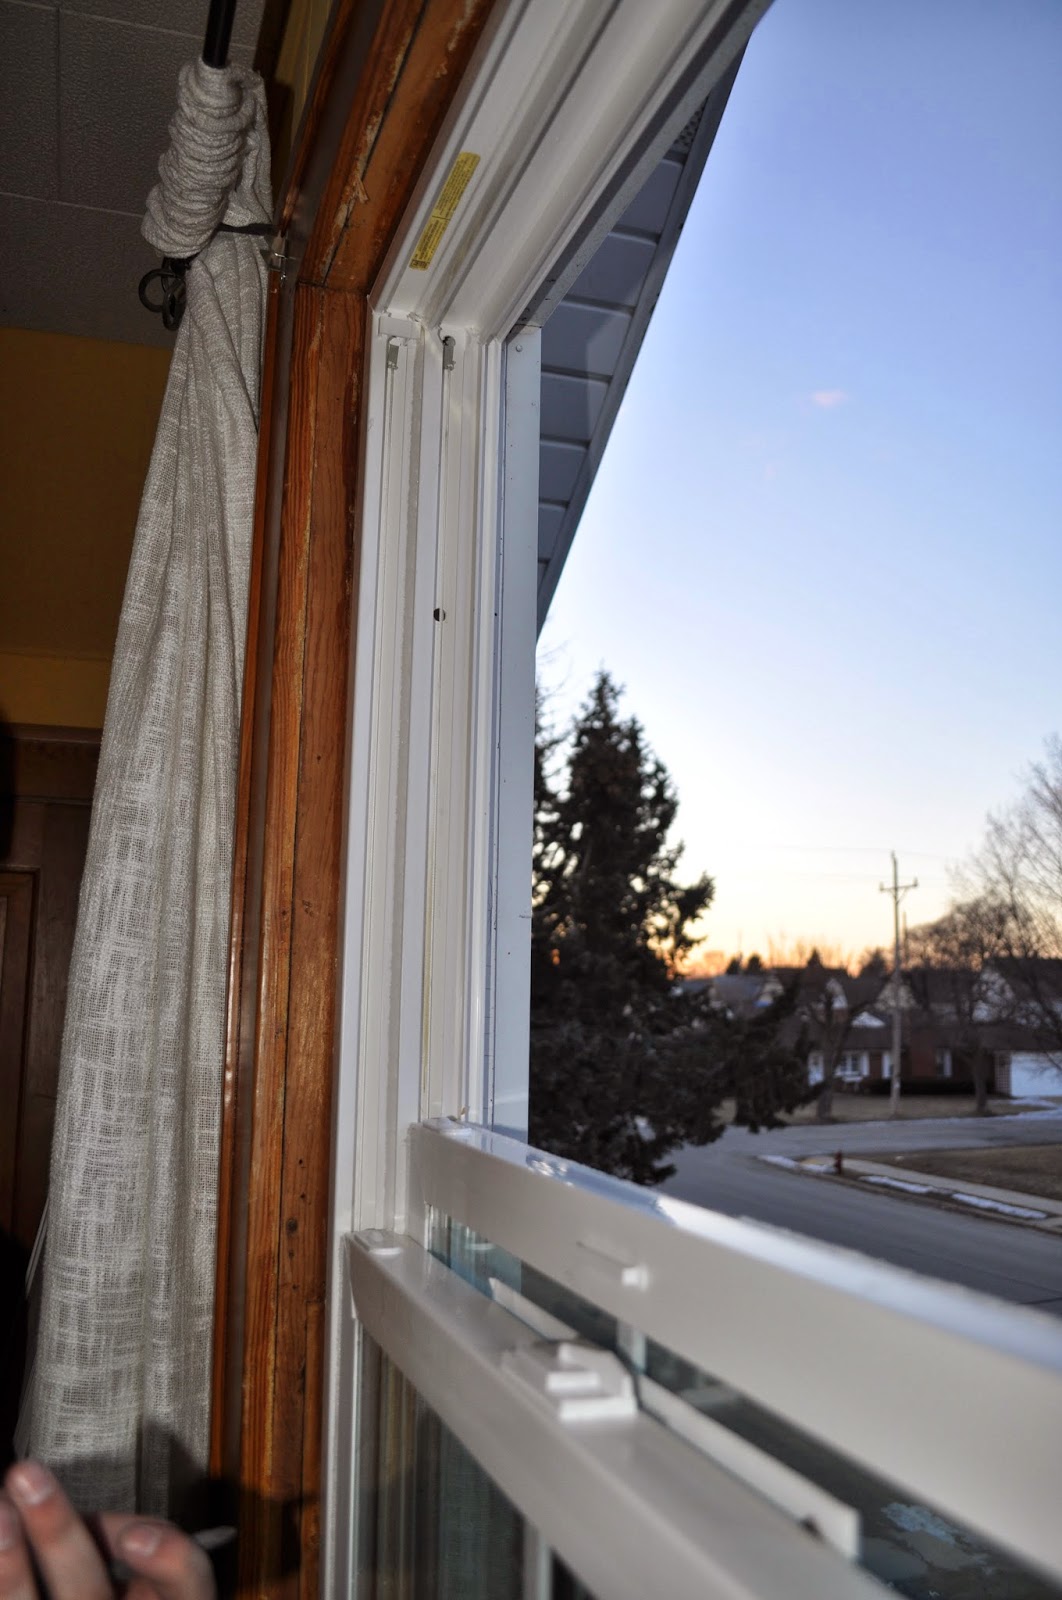 jeld-wen replacement windows, windows, replacement windows, spray foam insulation, insulation windows, caulk, vinyl windows